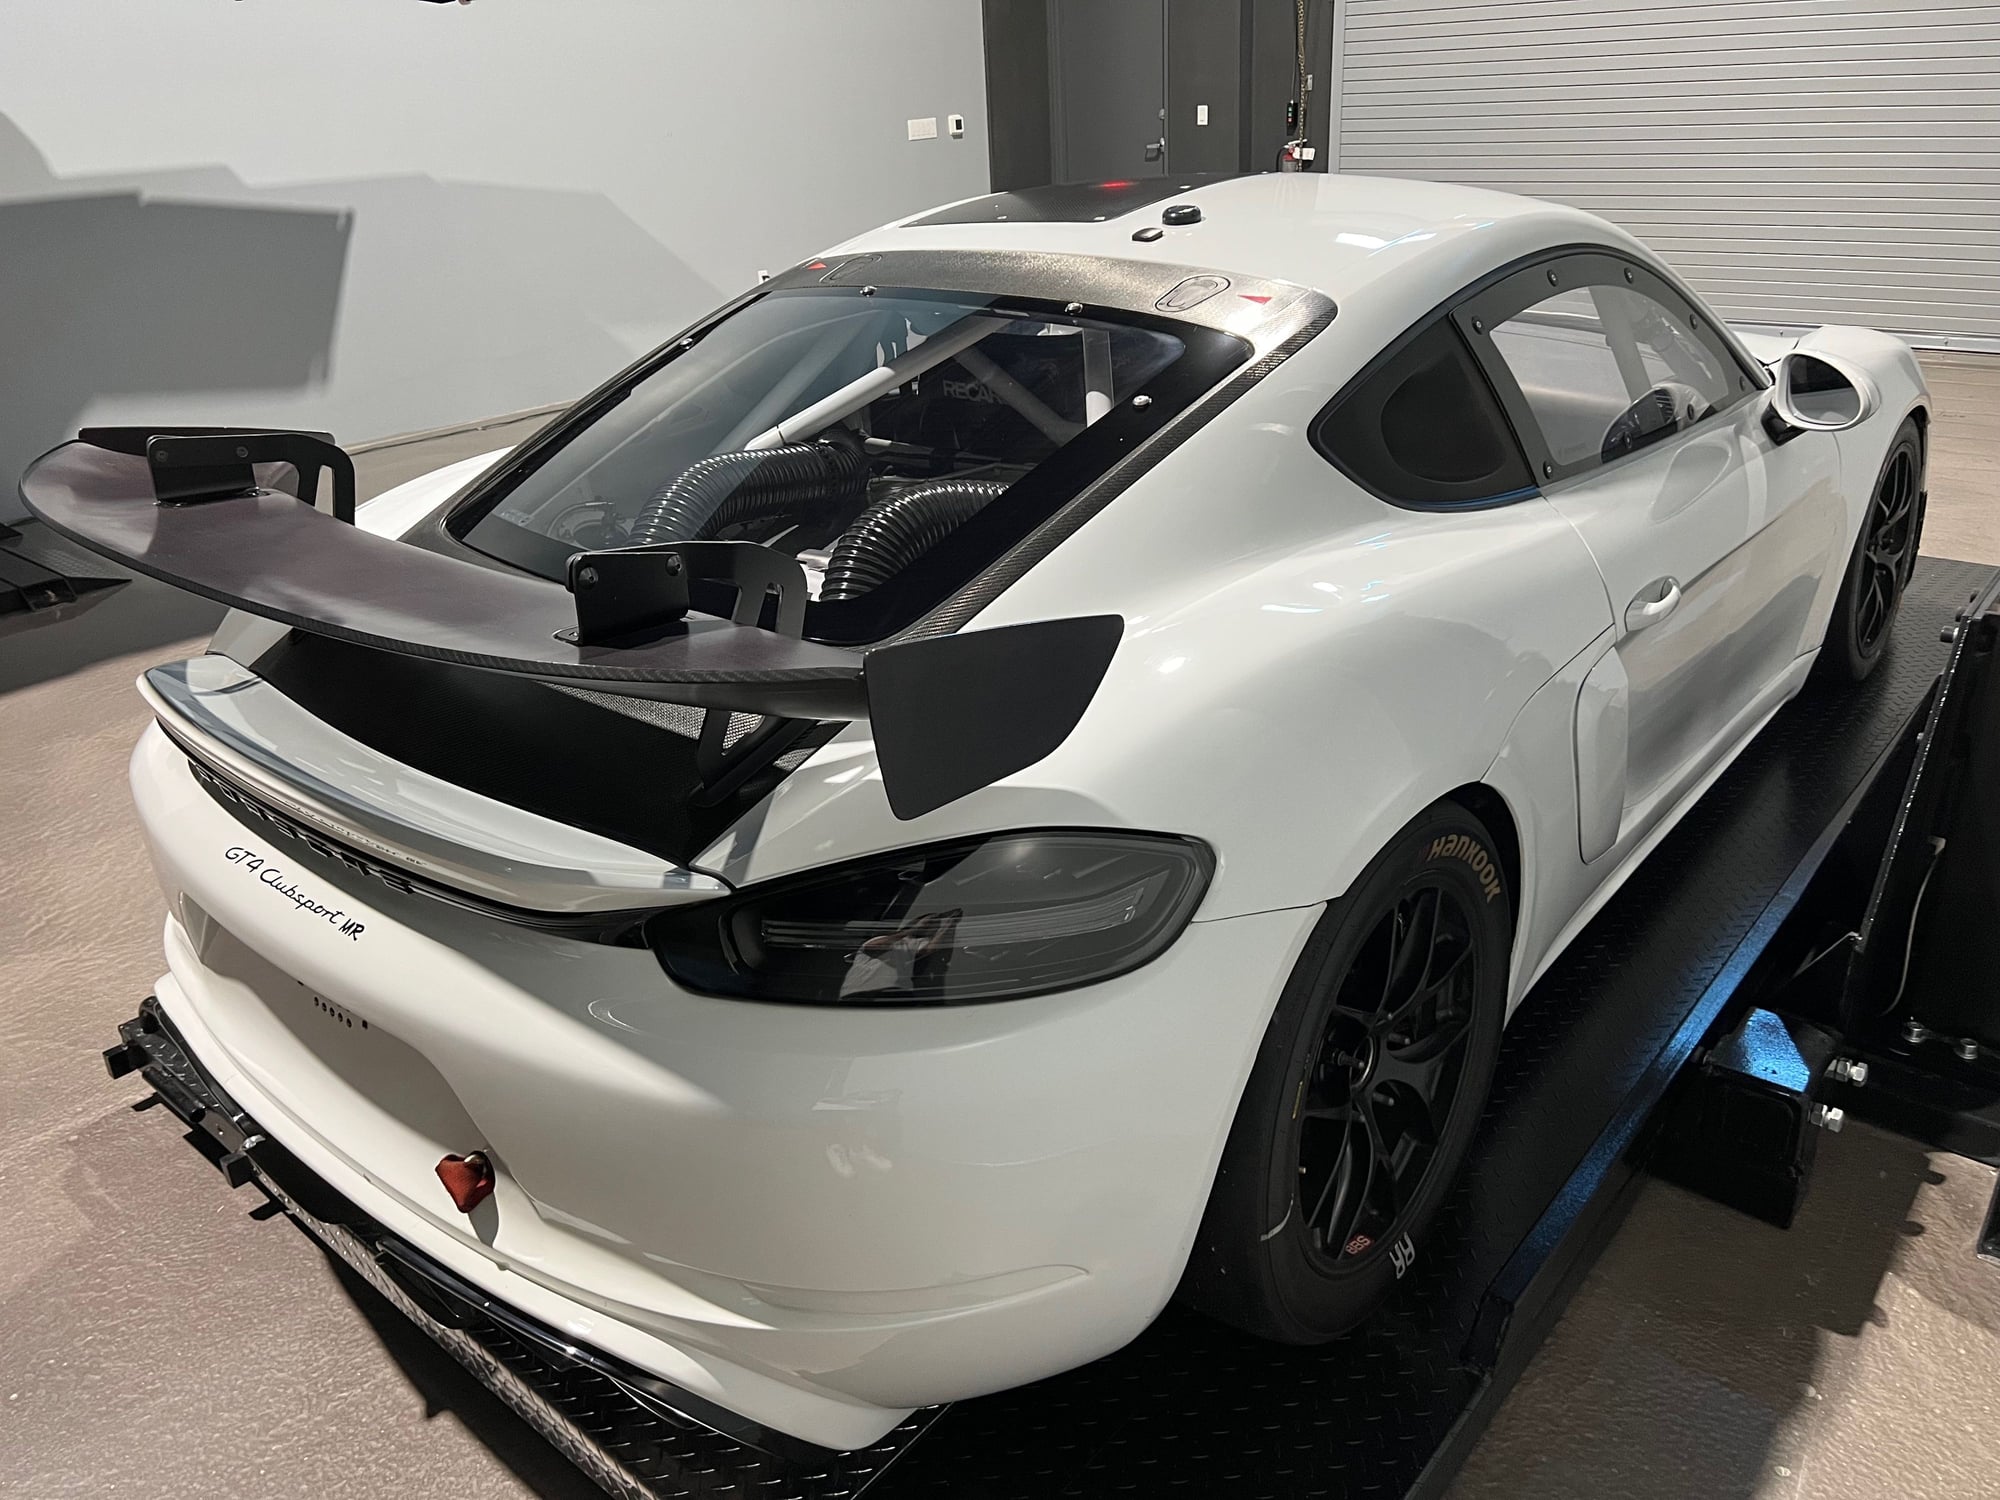 2019 Porsche Cayman GT4 - 2019 718 GT4 Clubsport MR - Used - VIN WP0ZZZ98ZKS299623 - 15,644 Miles - West Palm Beach, FL 33401, United States